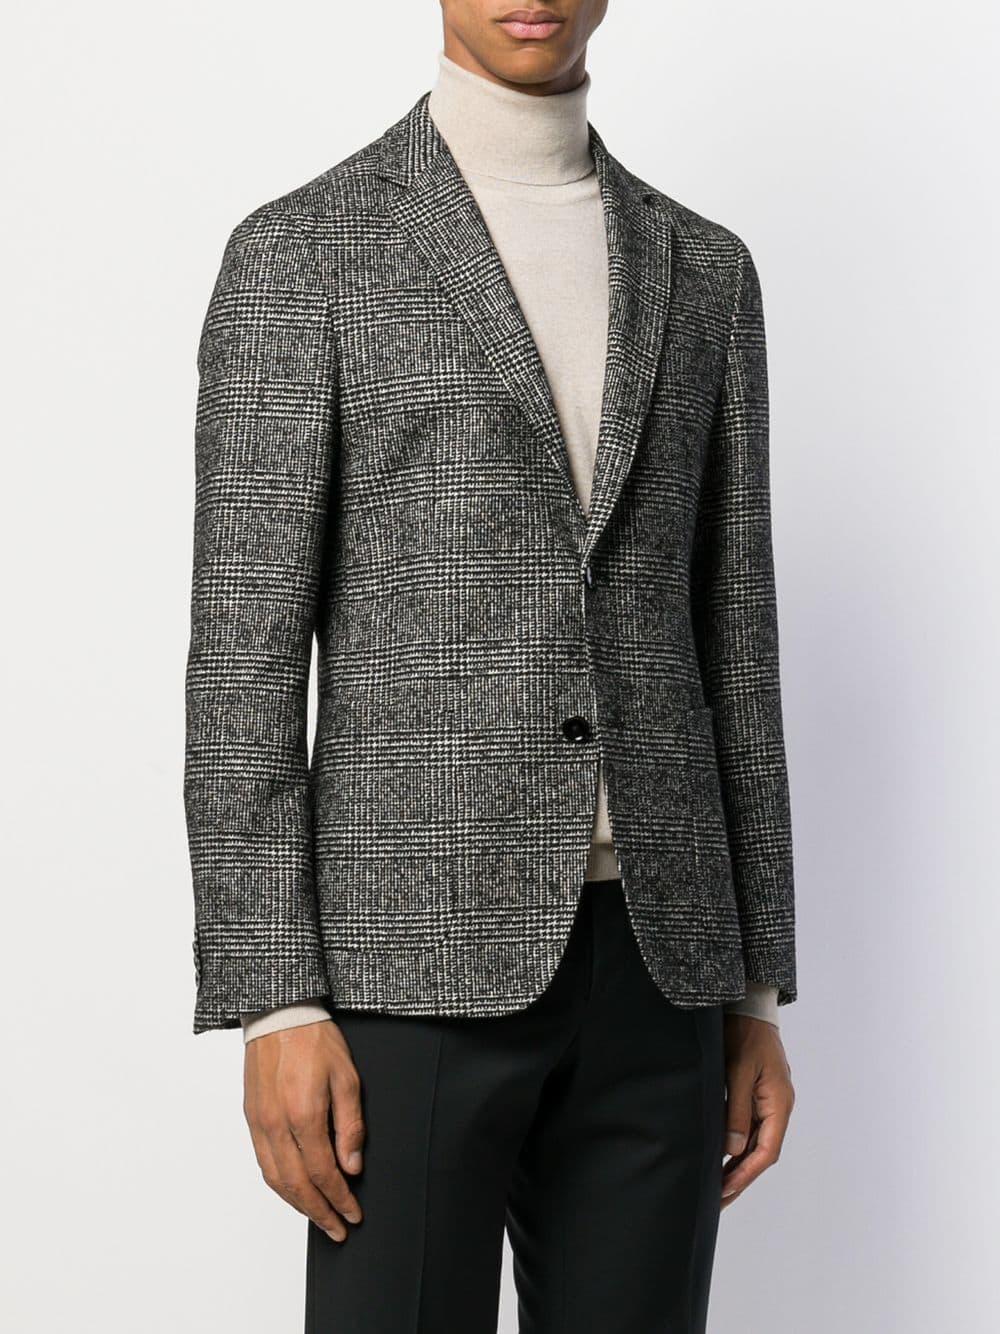 BOSS by Hugo Boss Wool Plaid Blazer in Grey (Gray) for Men - Lyst